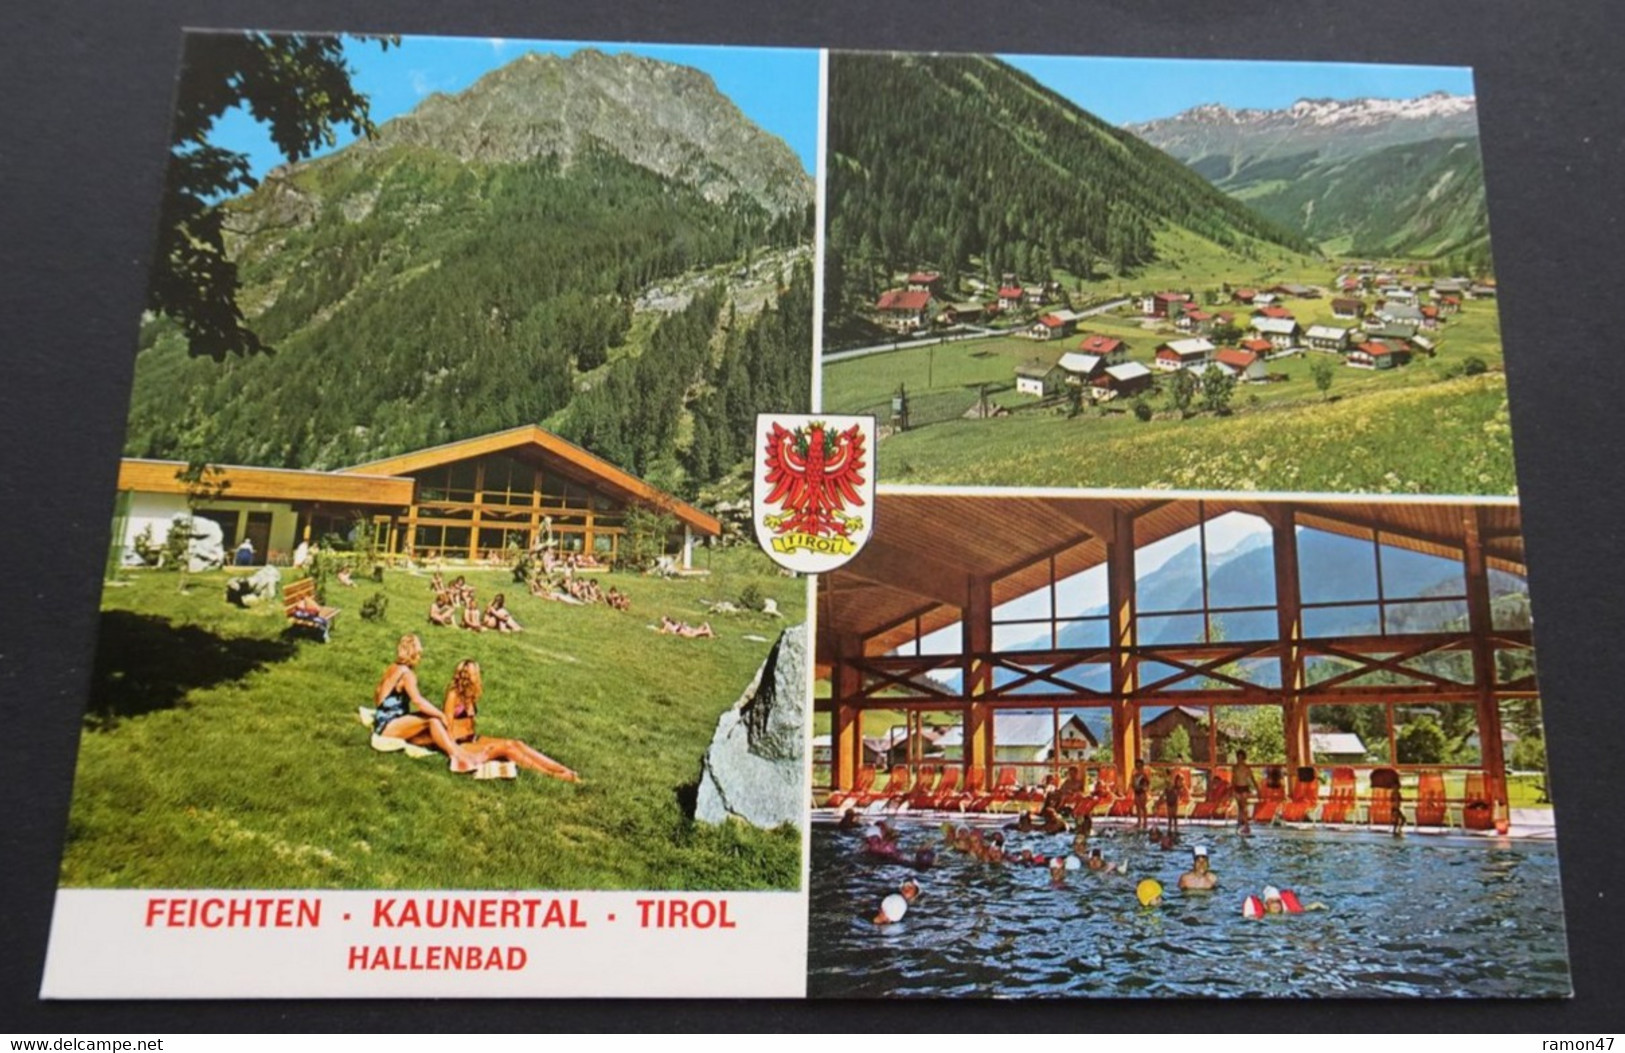 Feichten - Kaunertal, Tirol - Hallenbad (Rudolf Mathis, Landeck) - # 2150 - Kaunertal